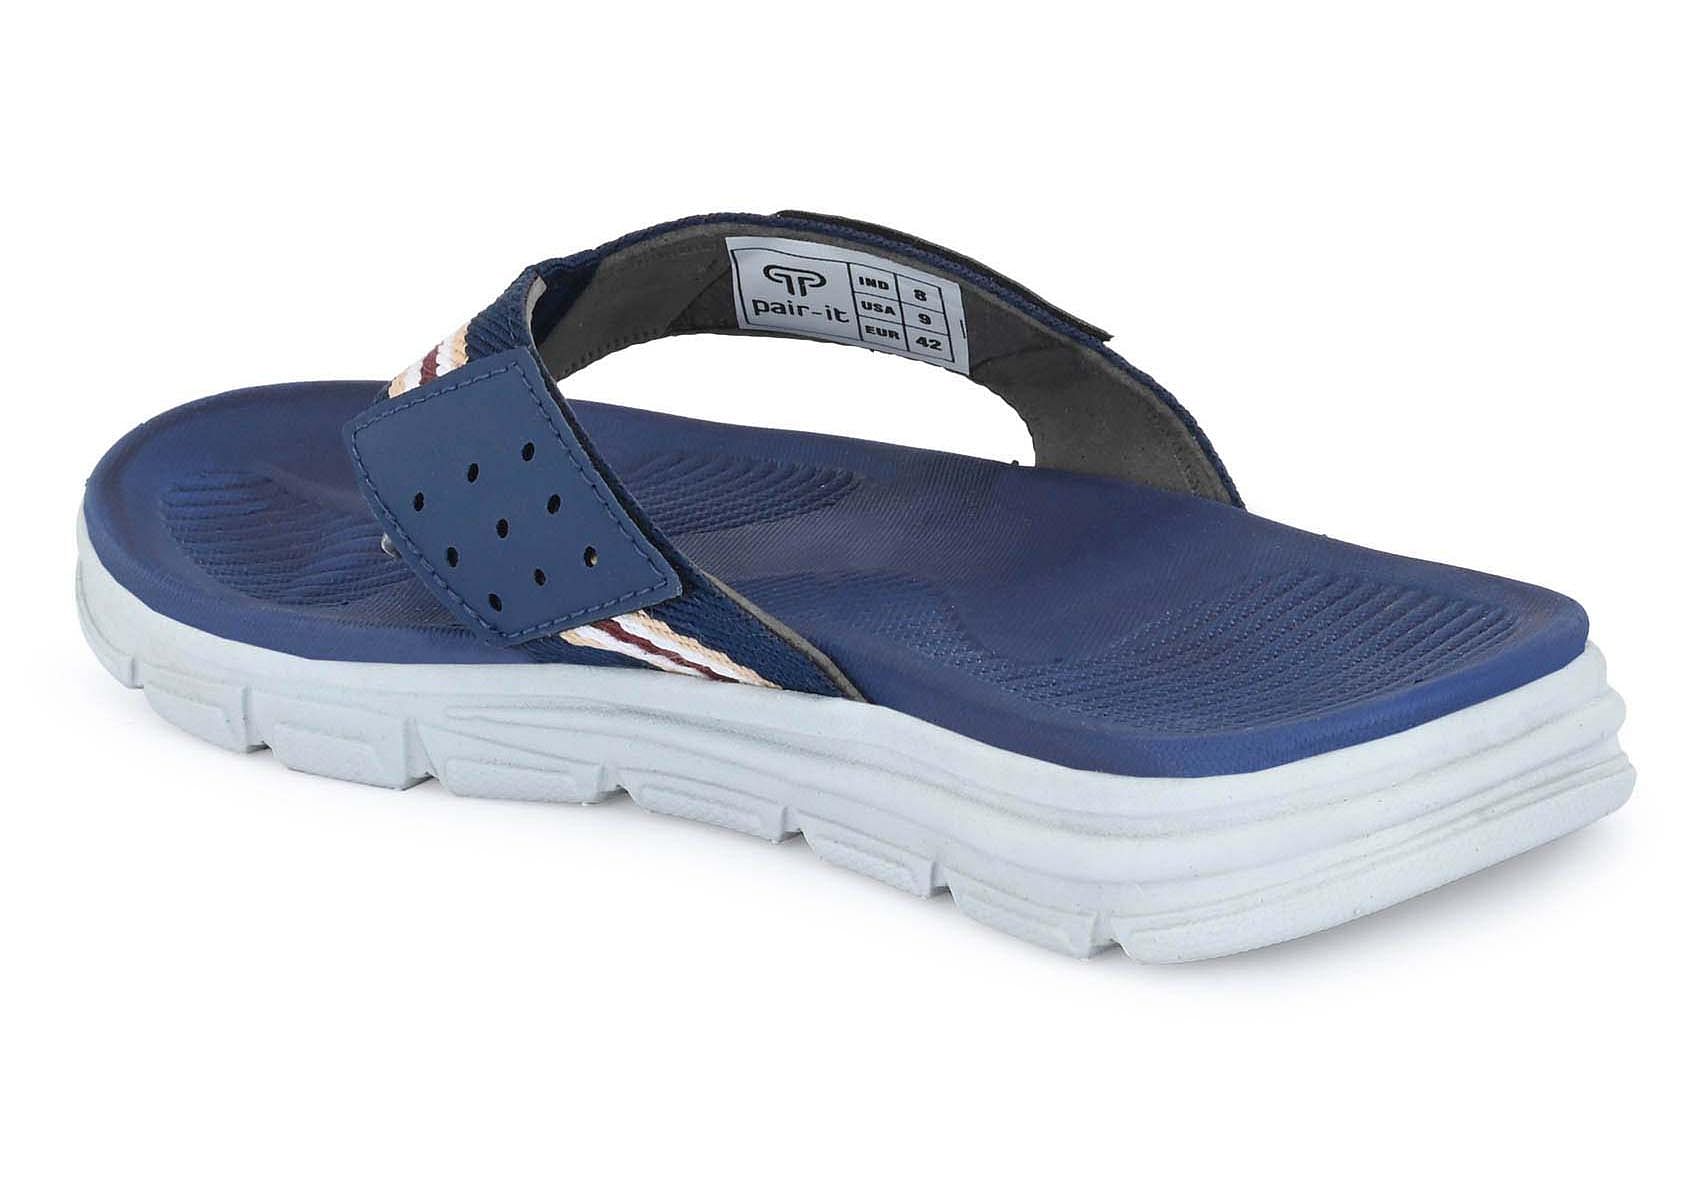 Pair-it Men's Rubberised EVA Slippers-LZ-Slippers120-Blue